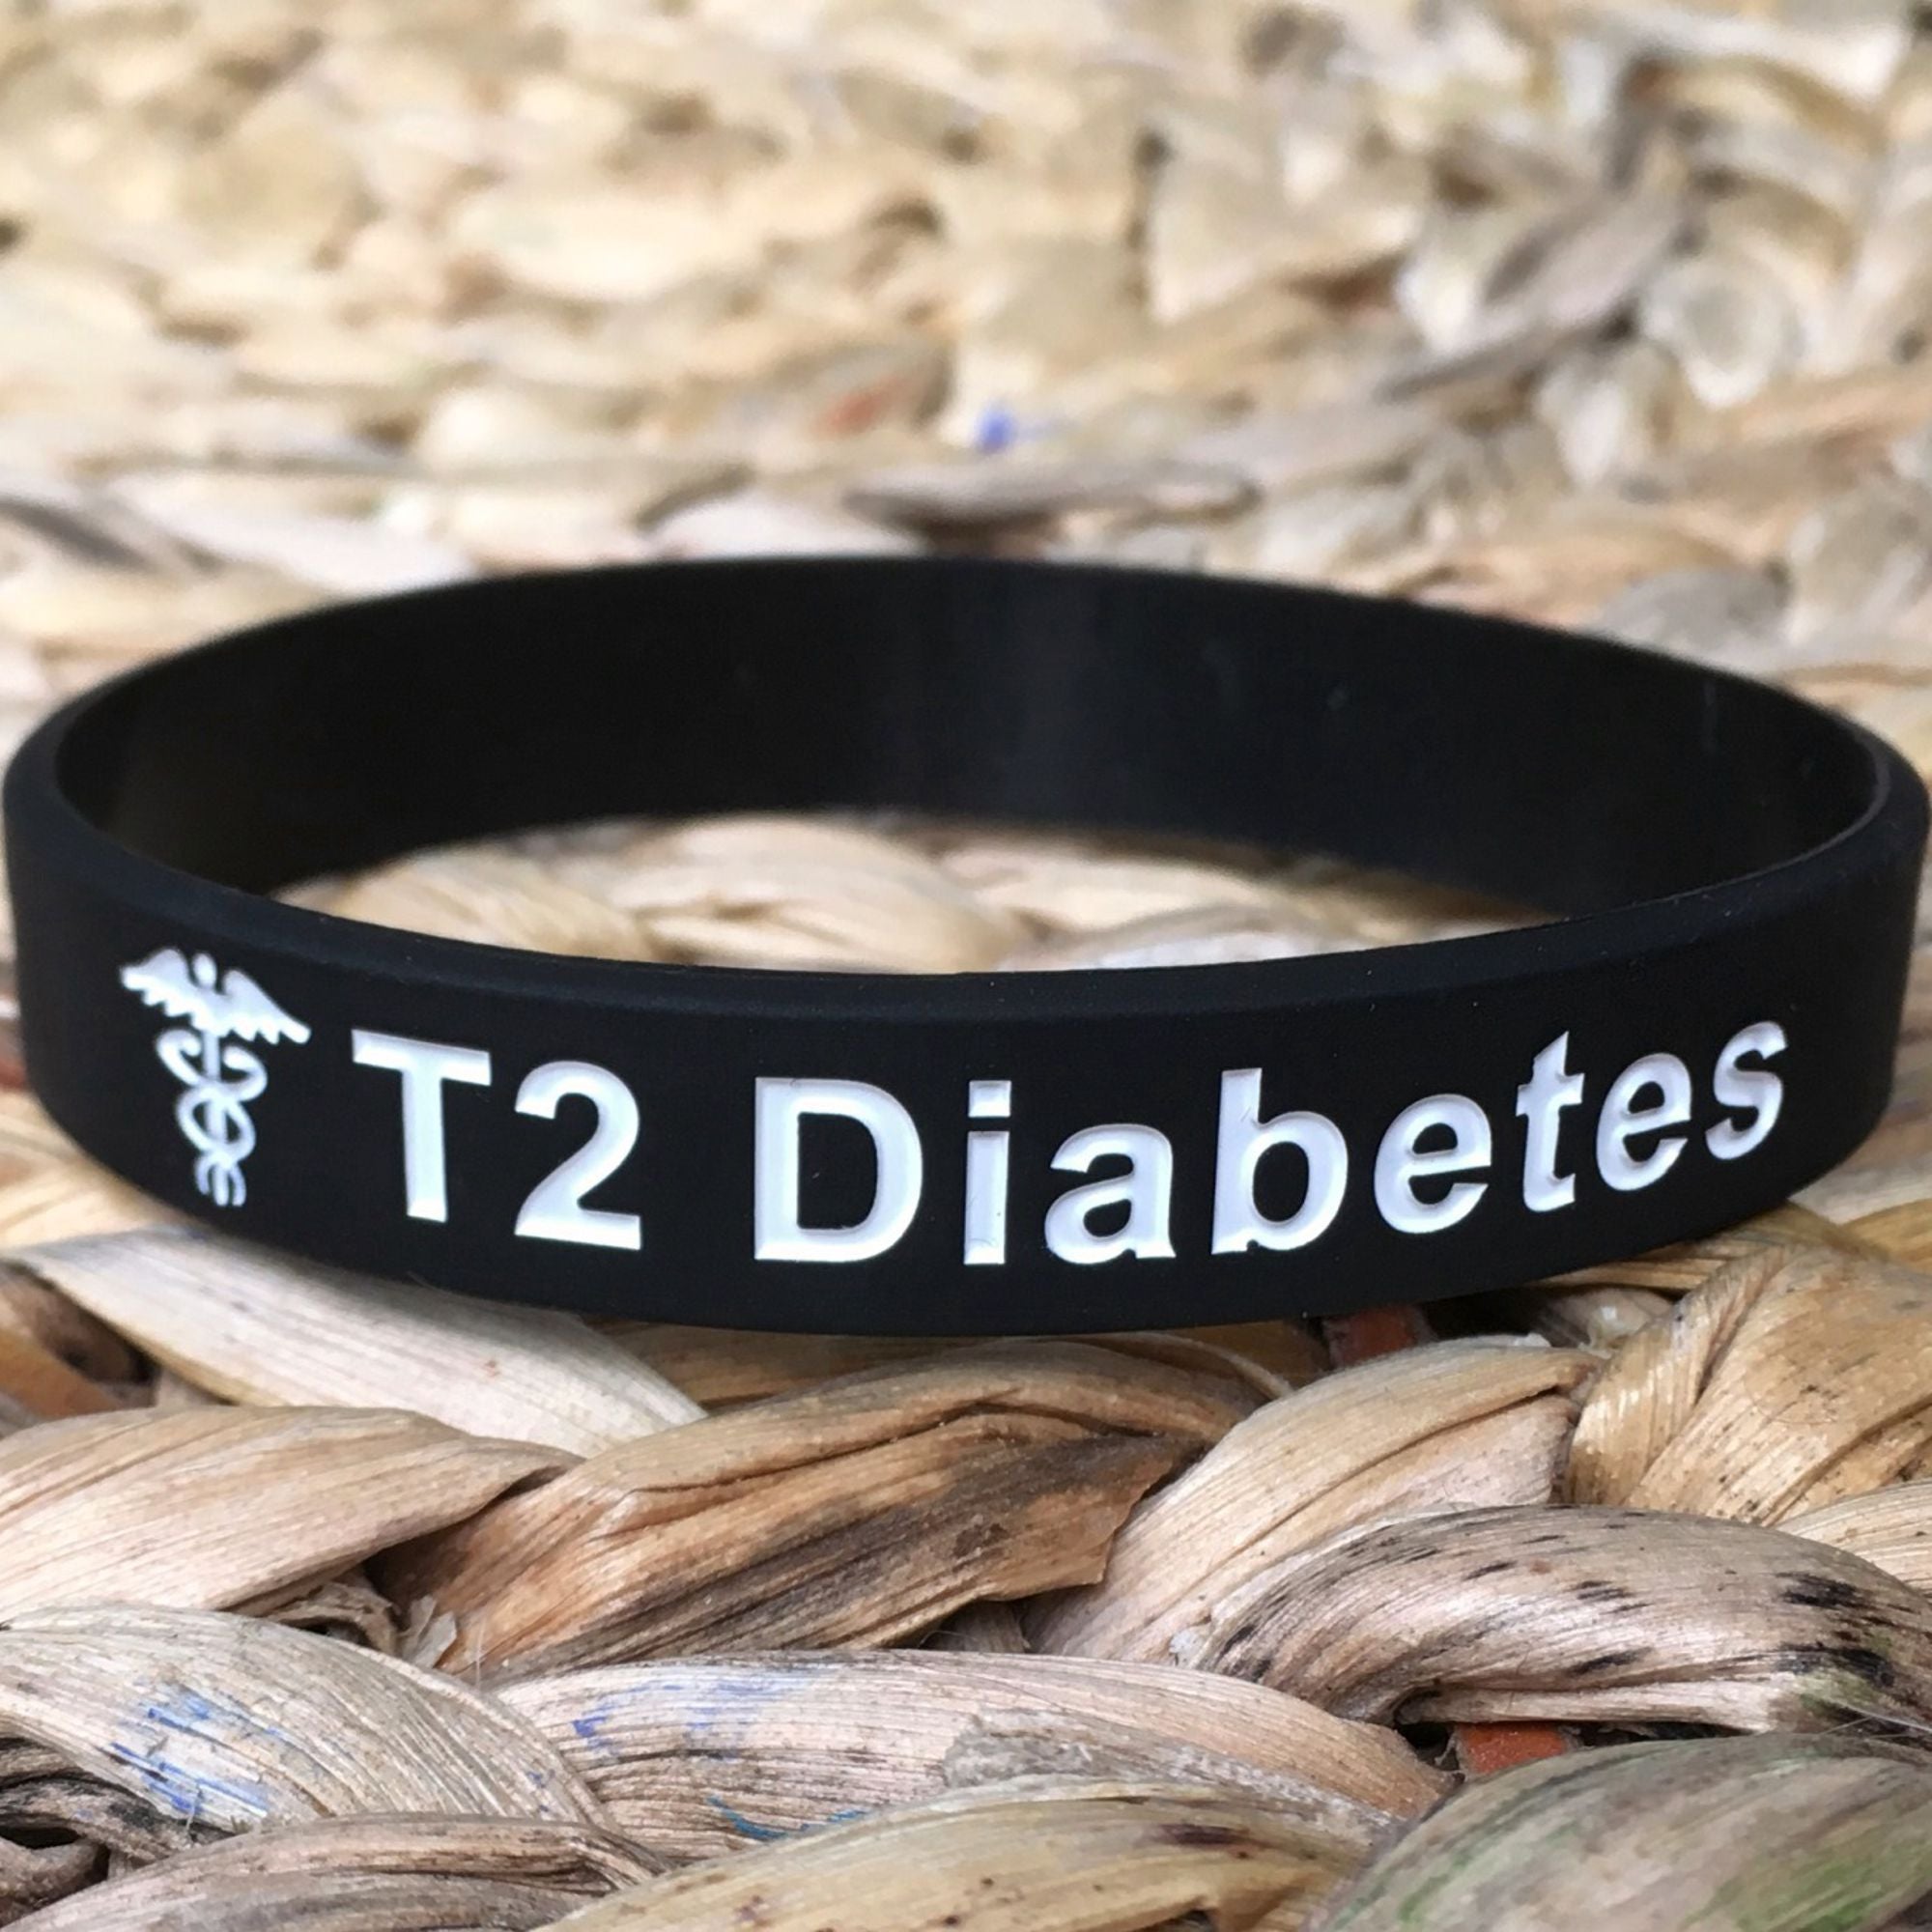 t2 diabetes unisex medical wristband id